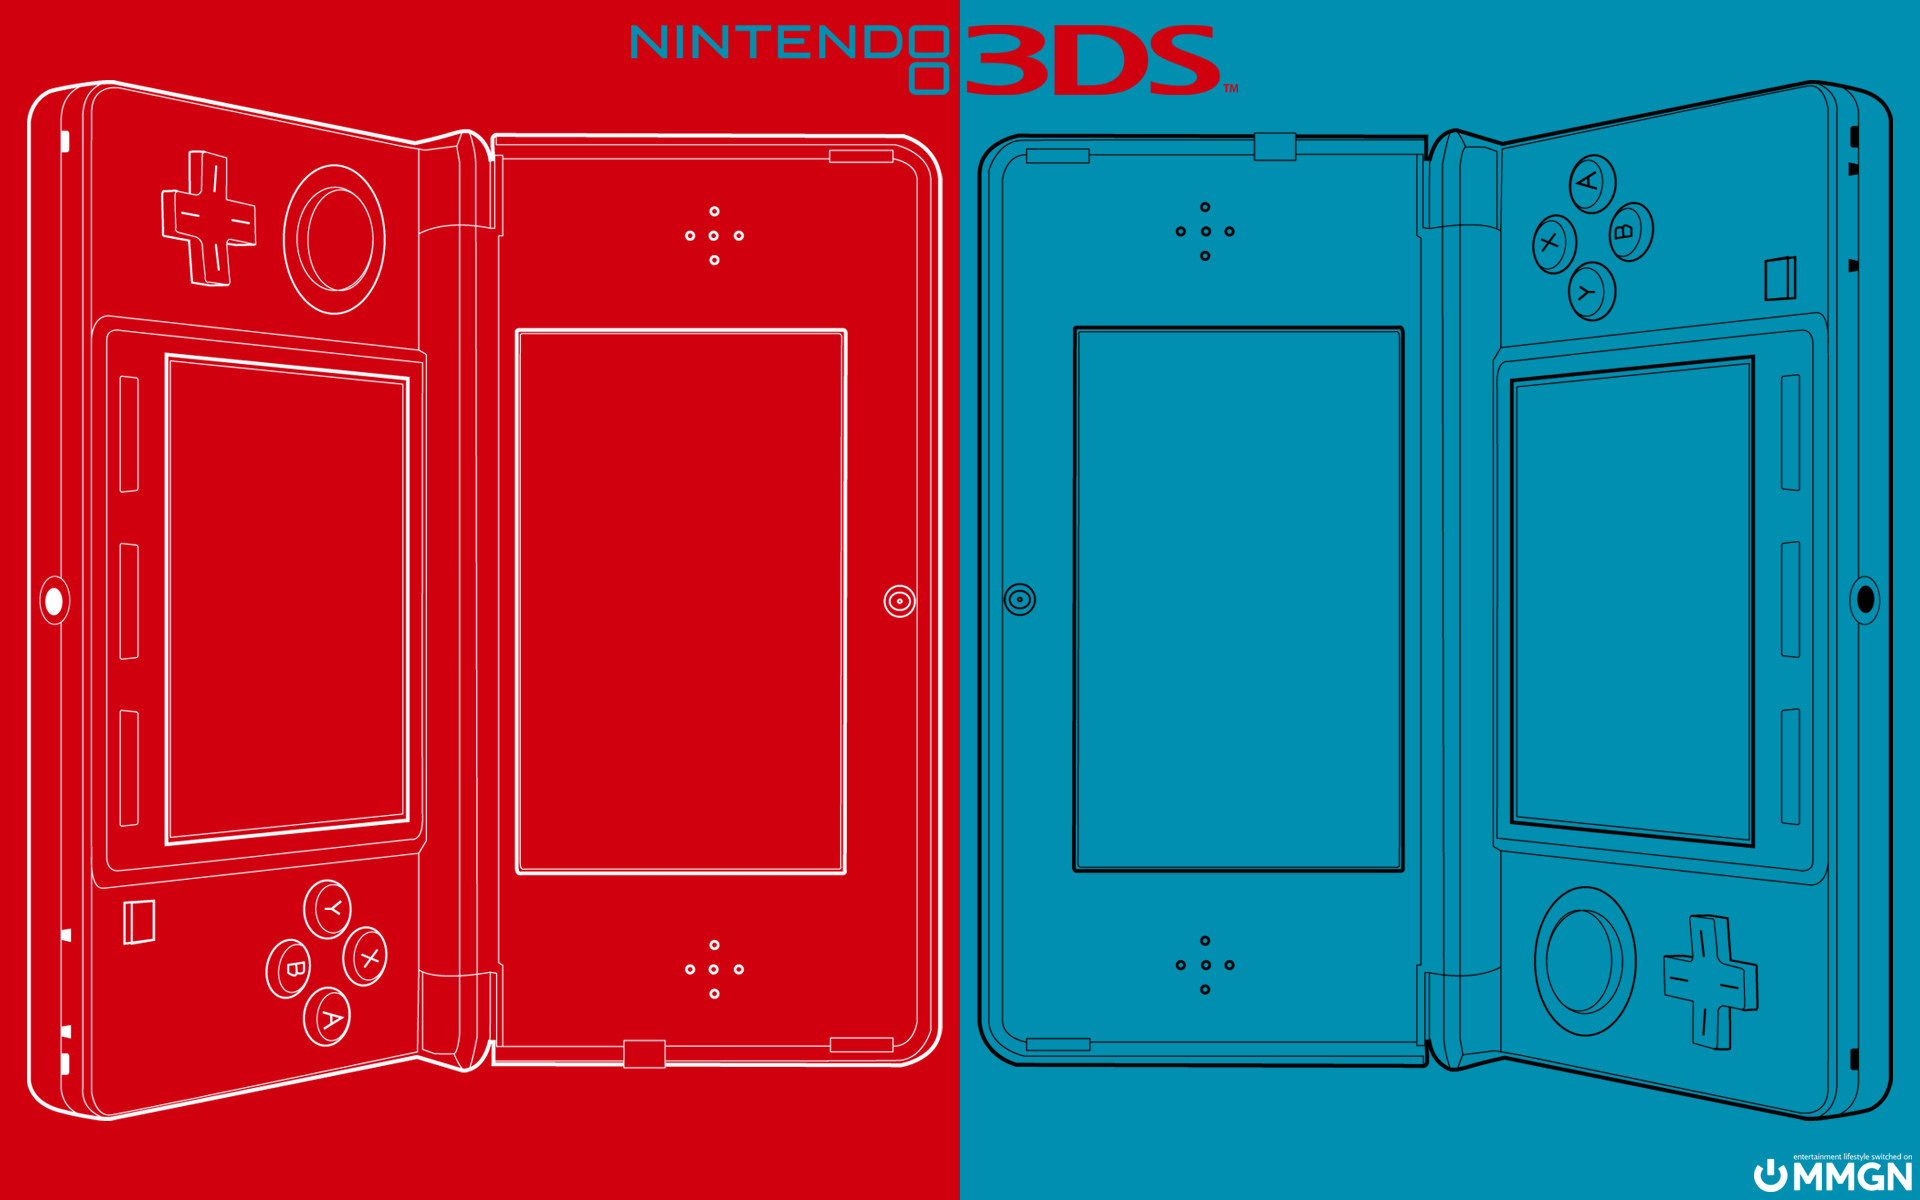 Nintendo 3ds Wallpaper Codes 67 Images